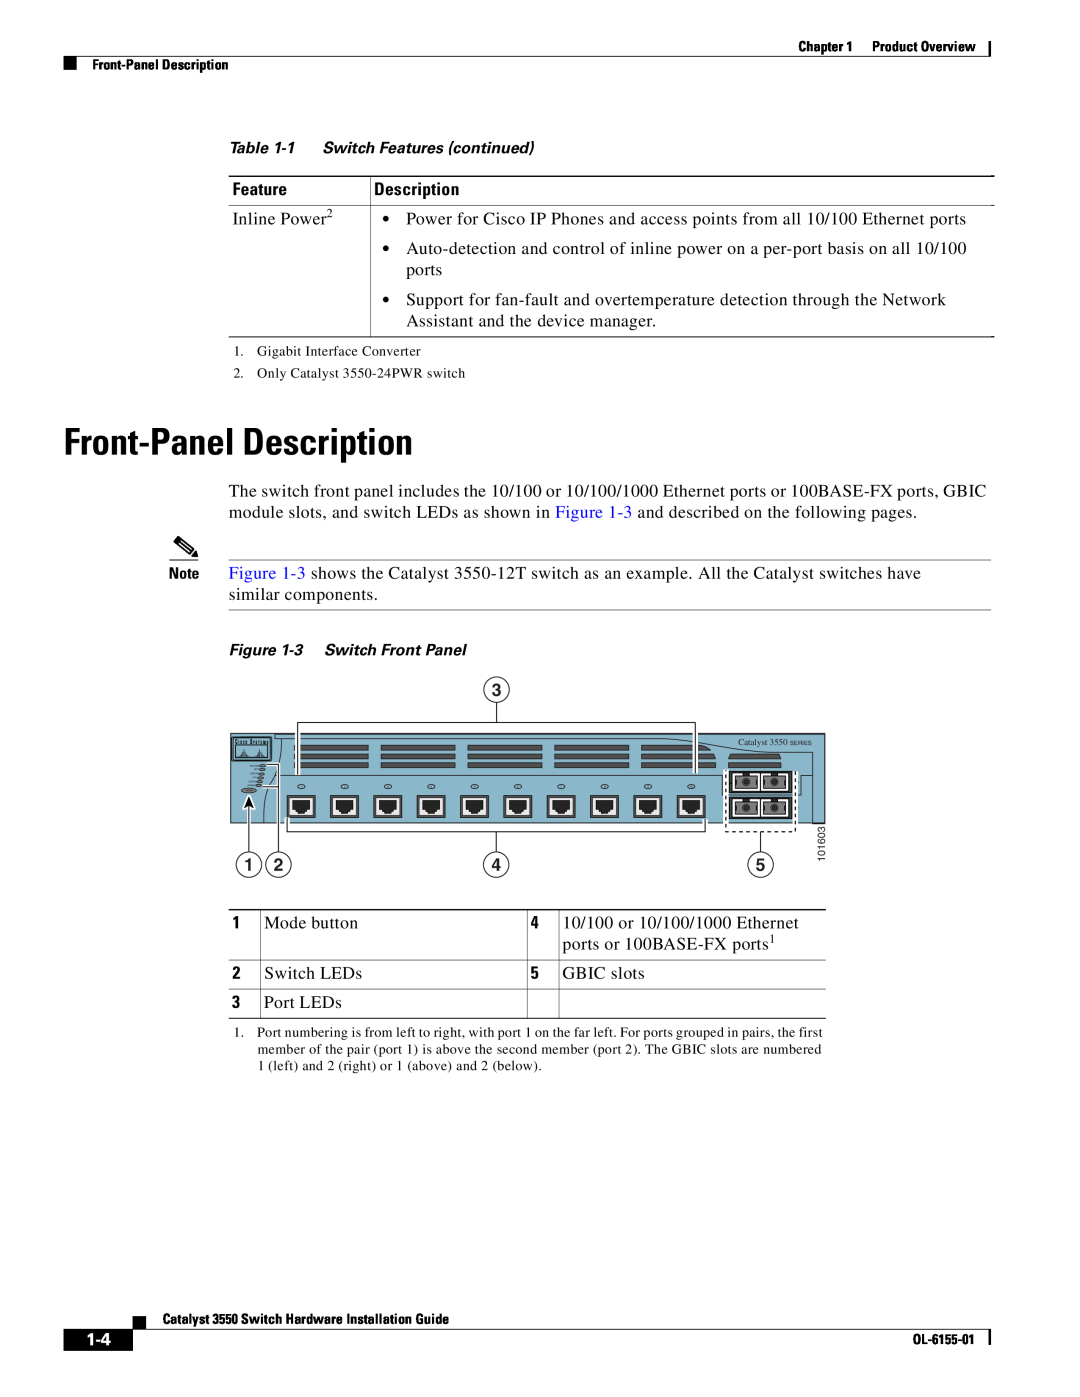 Cisco Systems 3550 manual Front-Panel Description, Feature, Inline Power 